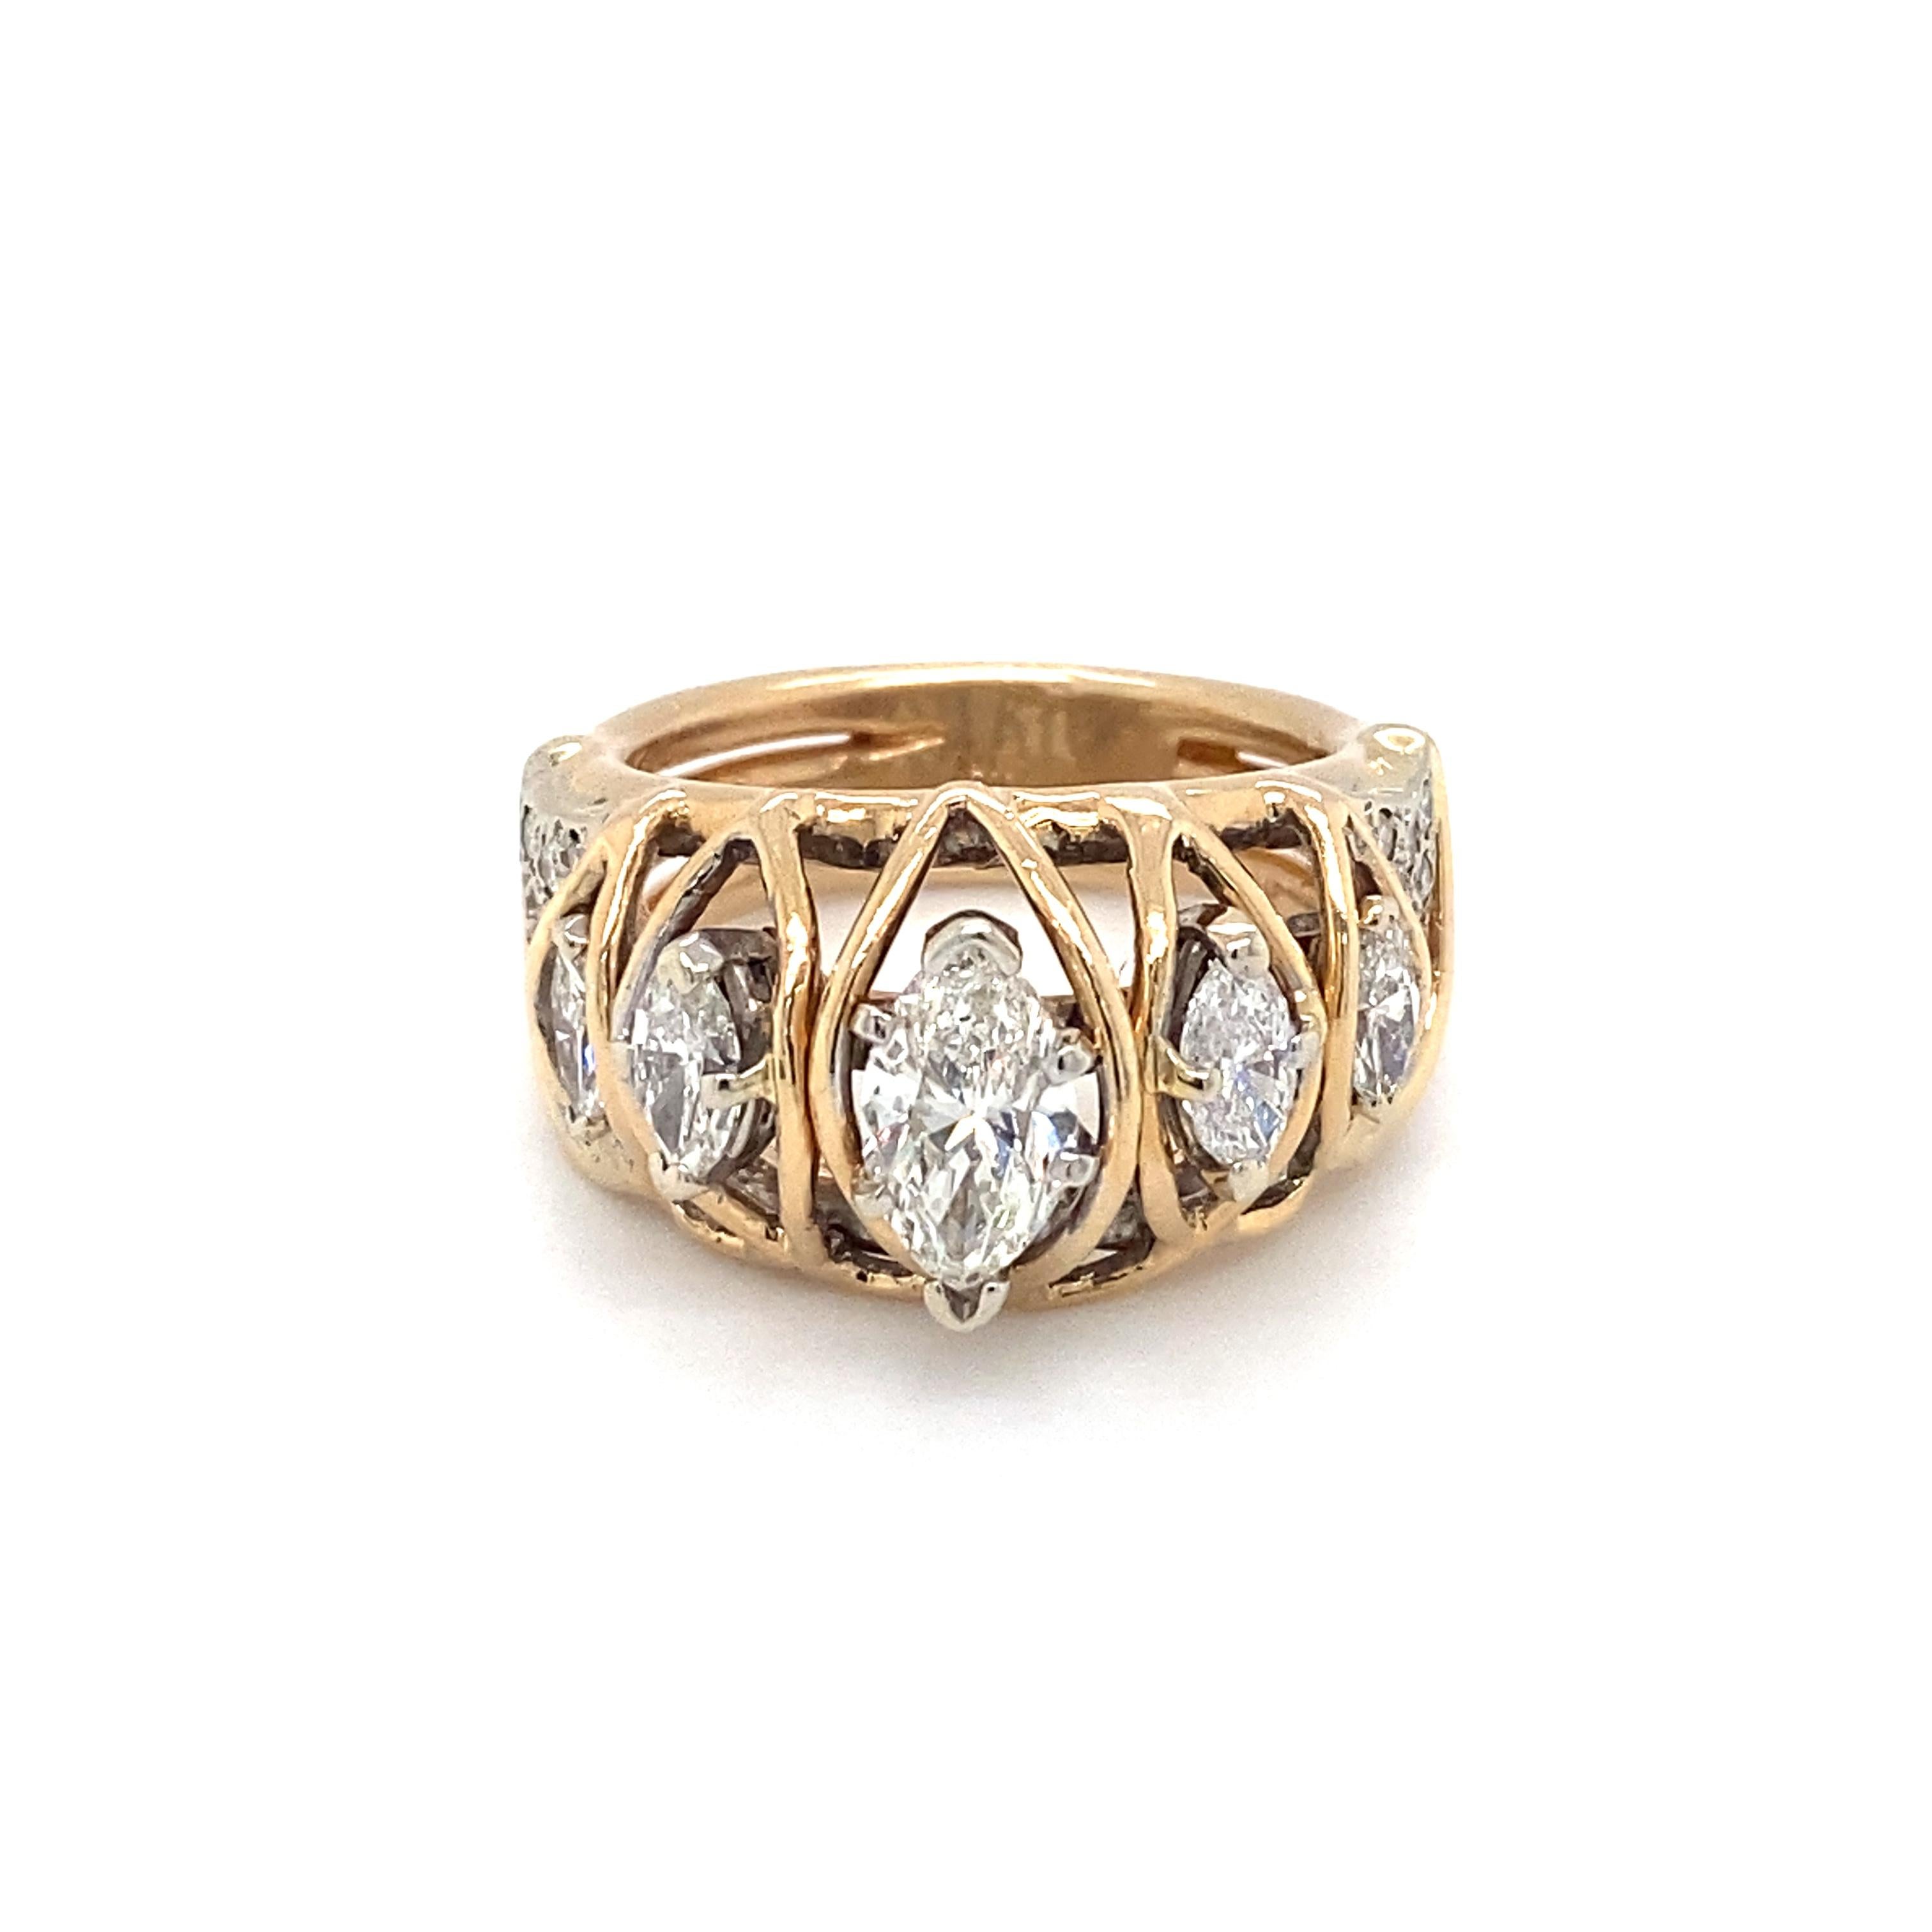 Circa 1970s 1.60 Carat Marquise Diamond Retro Ring in 14 Karat Gold In Excellent Condition For Sale In Atlanta, GA